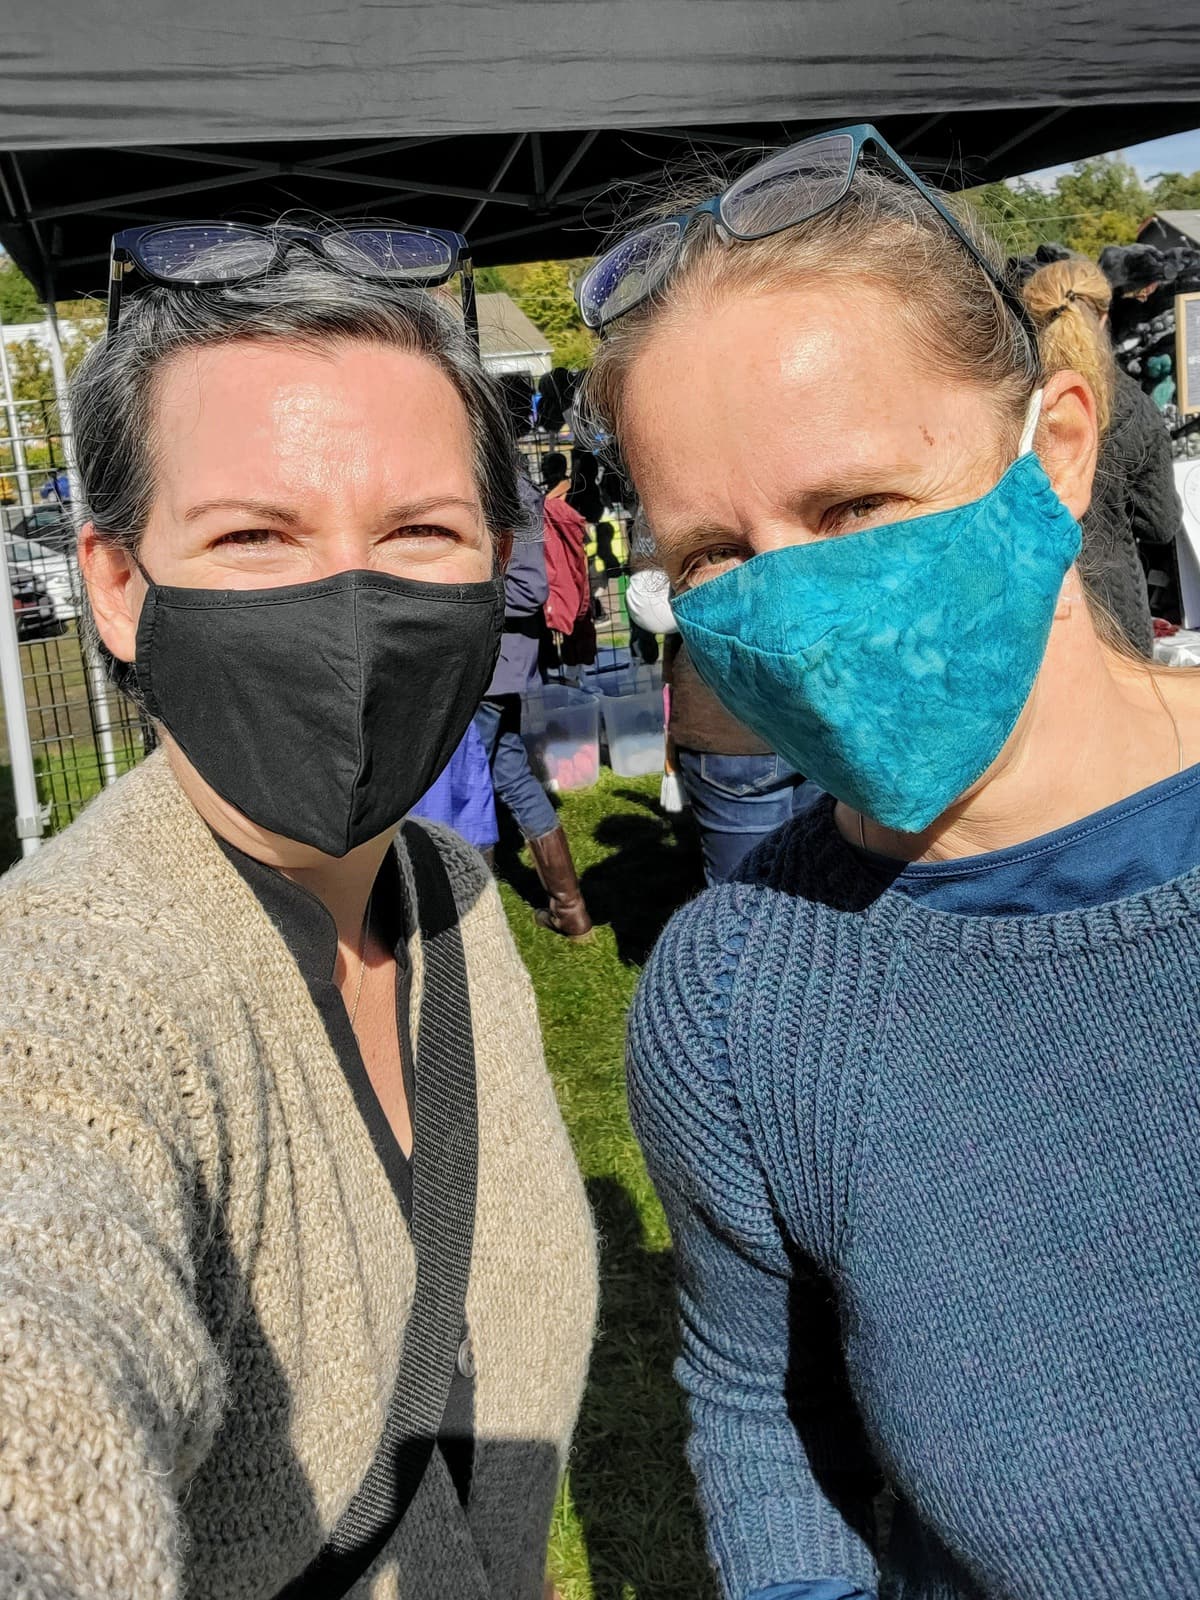 Image description: Two white women wearing face masks pose for a selfie.